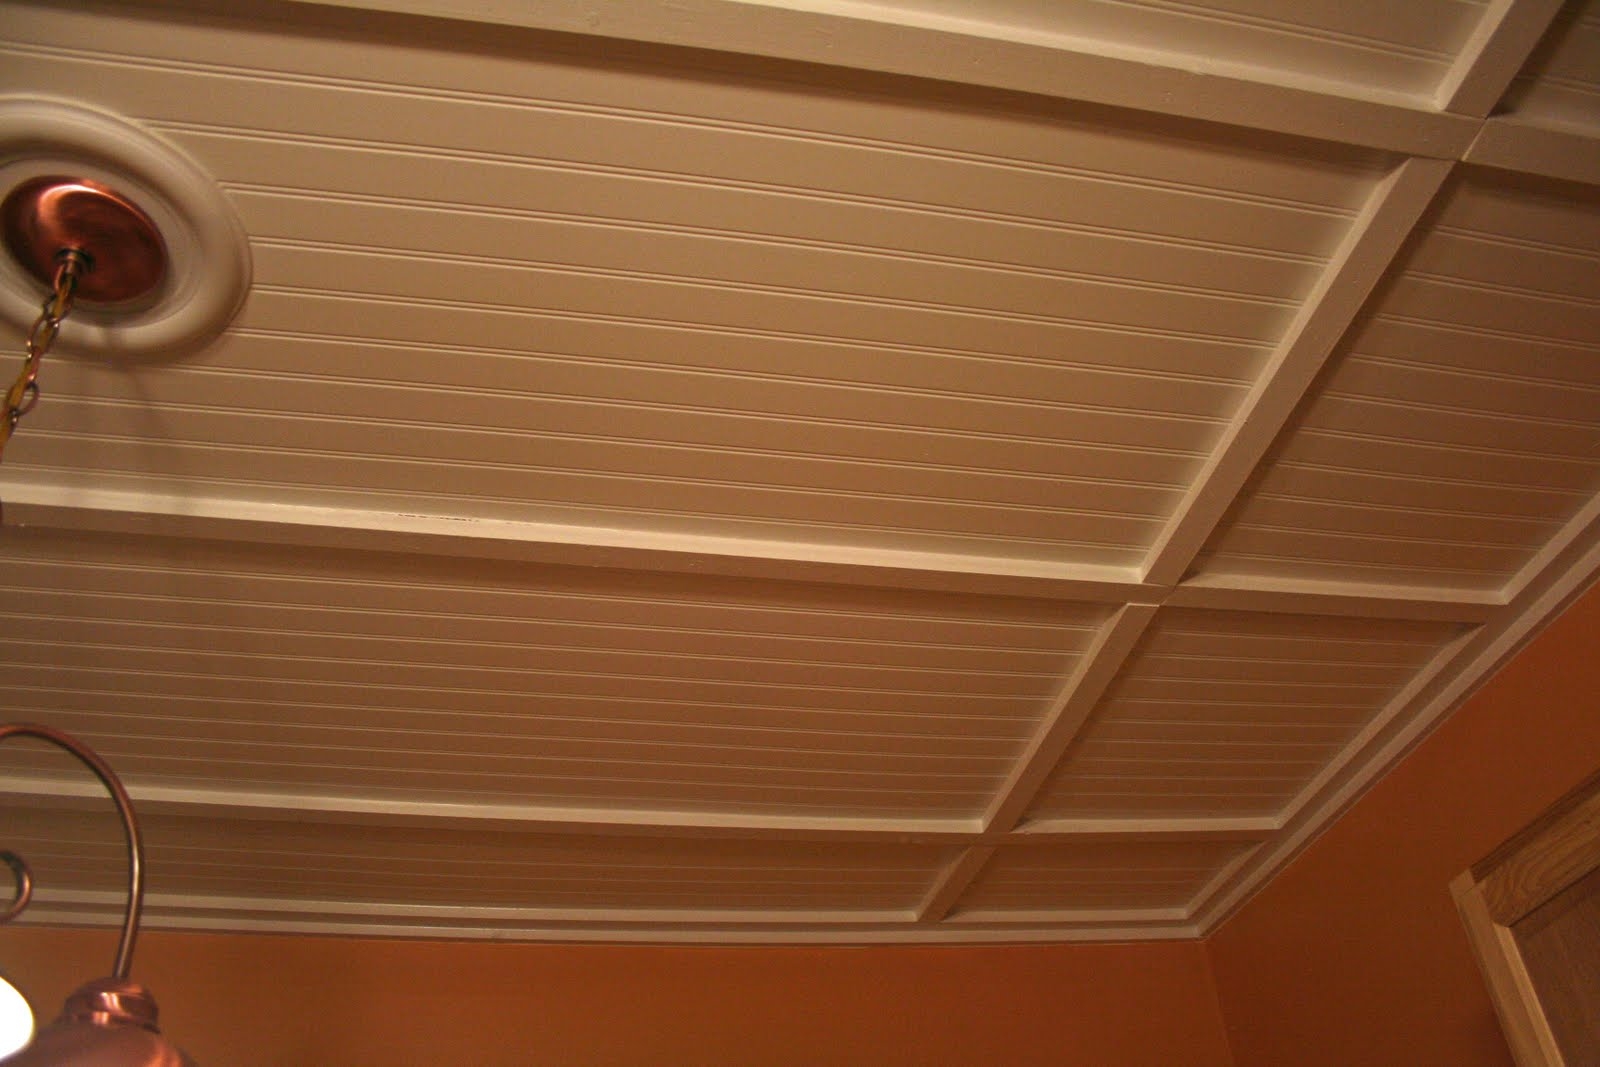 Ceiling Tiles Wood Look Ceiling Tiles Wood Look tile ideas drop ceiling return air grilles 2x2 lay in ceiling 1600 X 1067